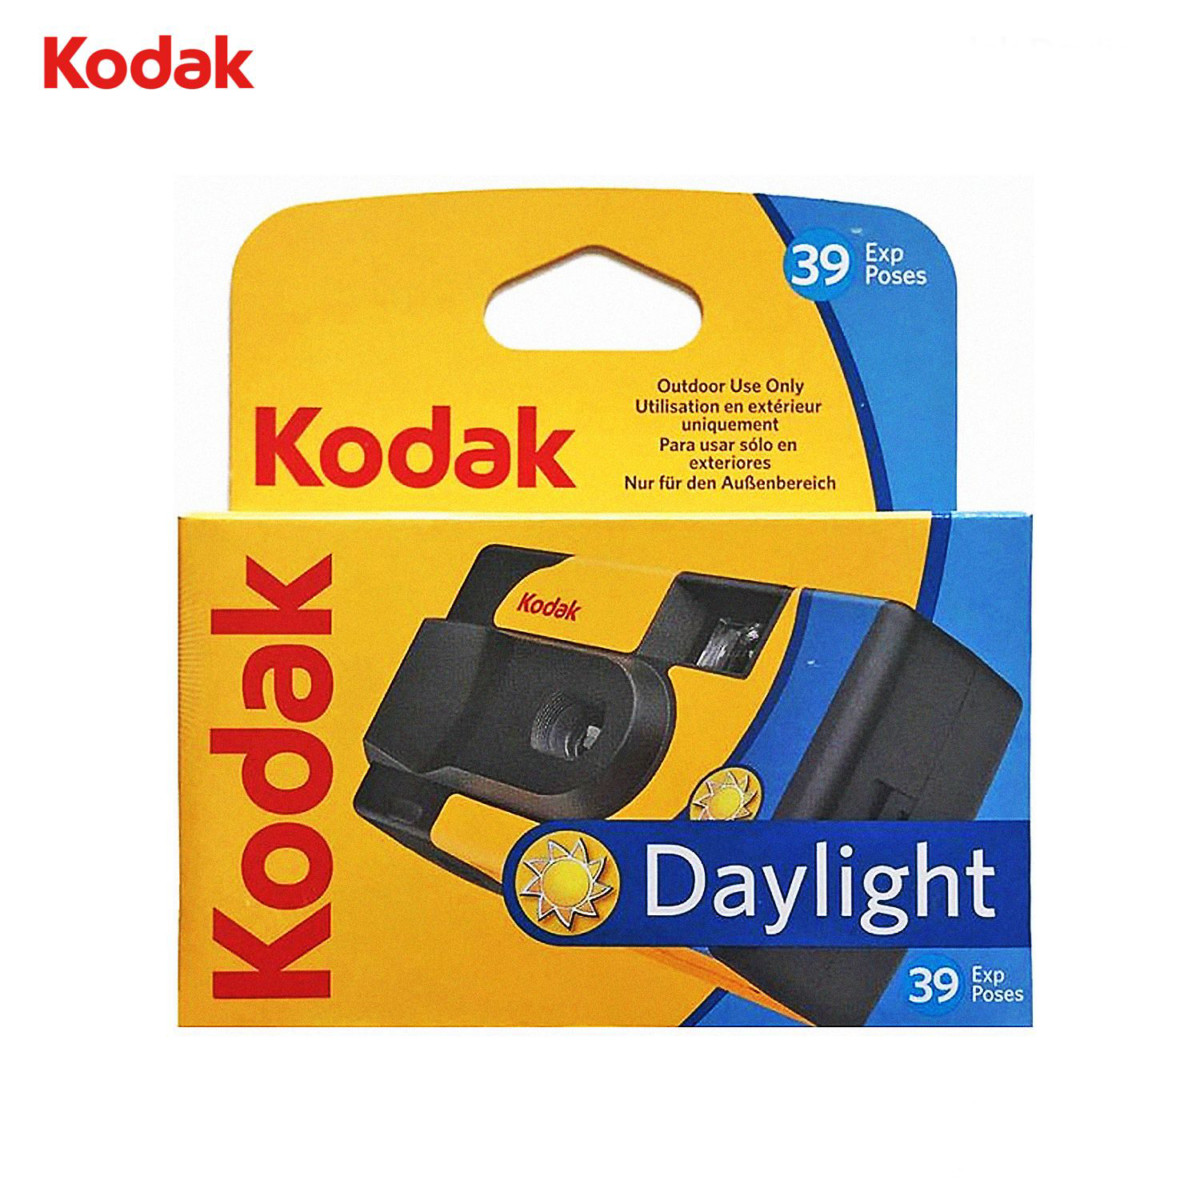 KODAK Daylight Single Use Camera 39 Exposures